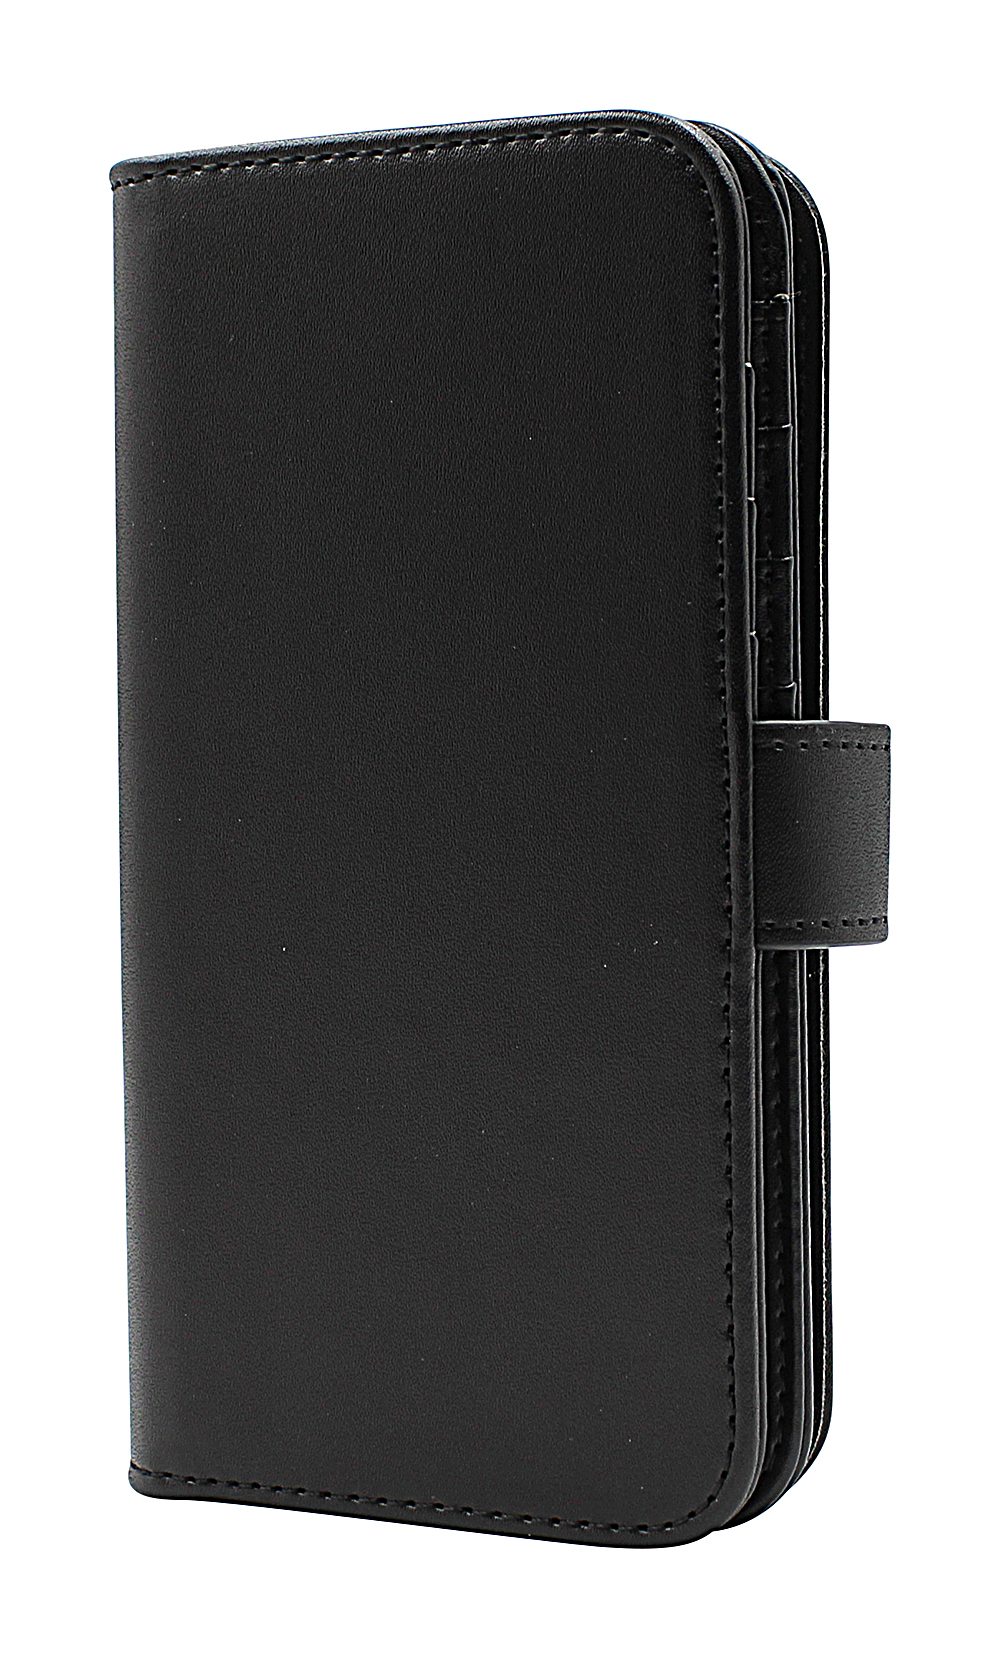 CoverInSkimblocker XL Wallet iPhone 12 (6.1)